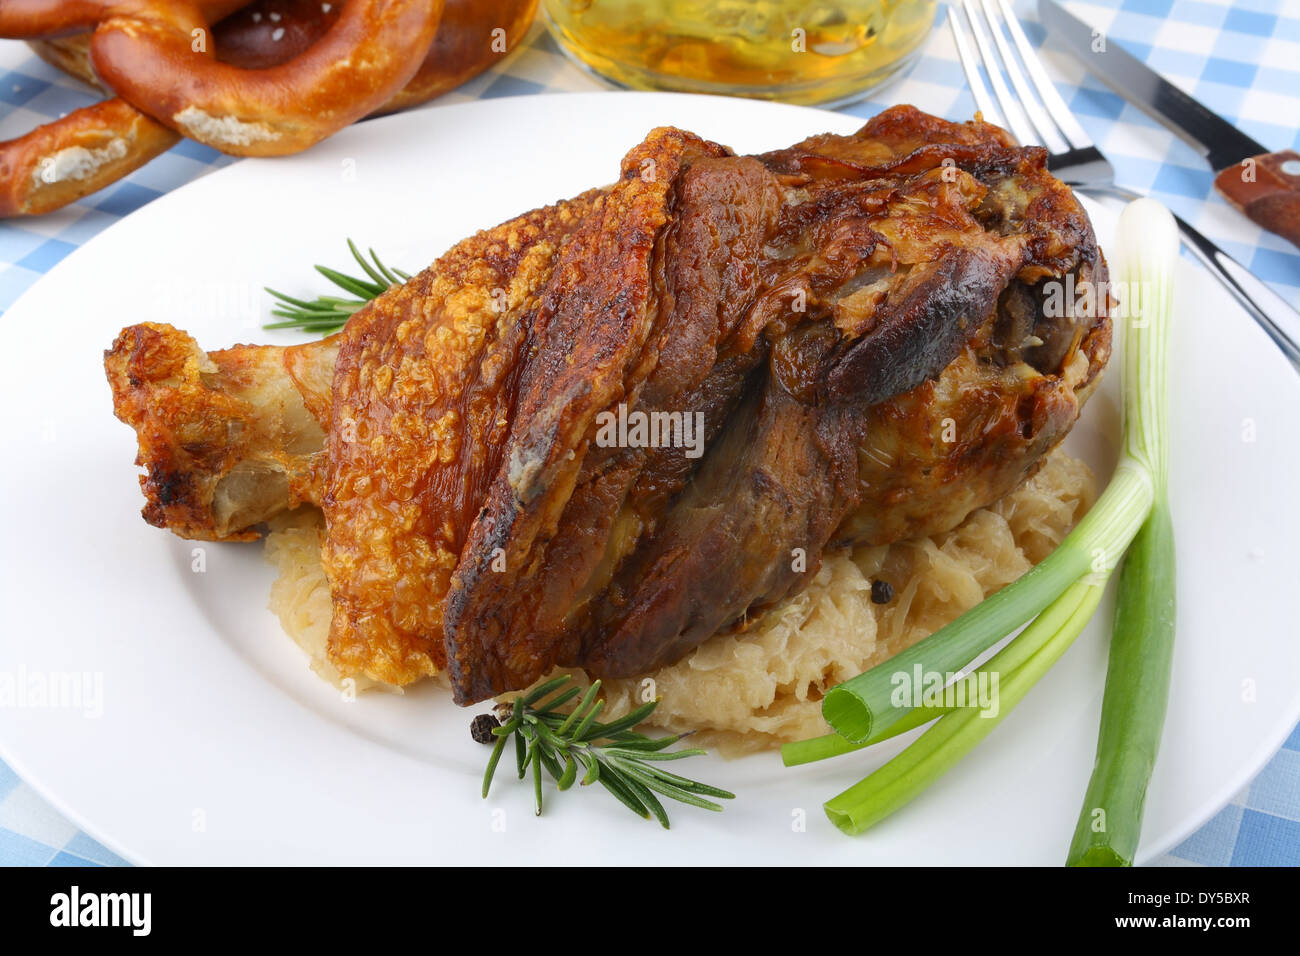 Grilled pork hock with sauerkraut, pretzels, beer, top view Stock Photo